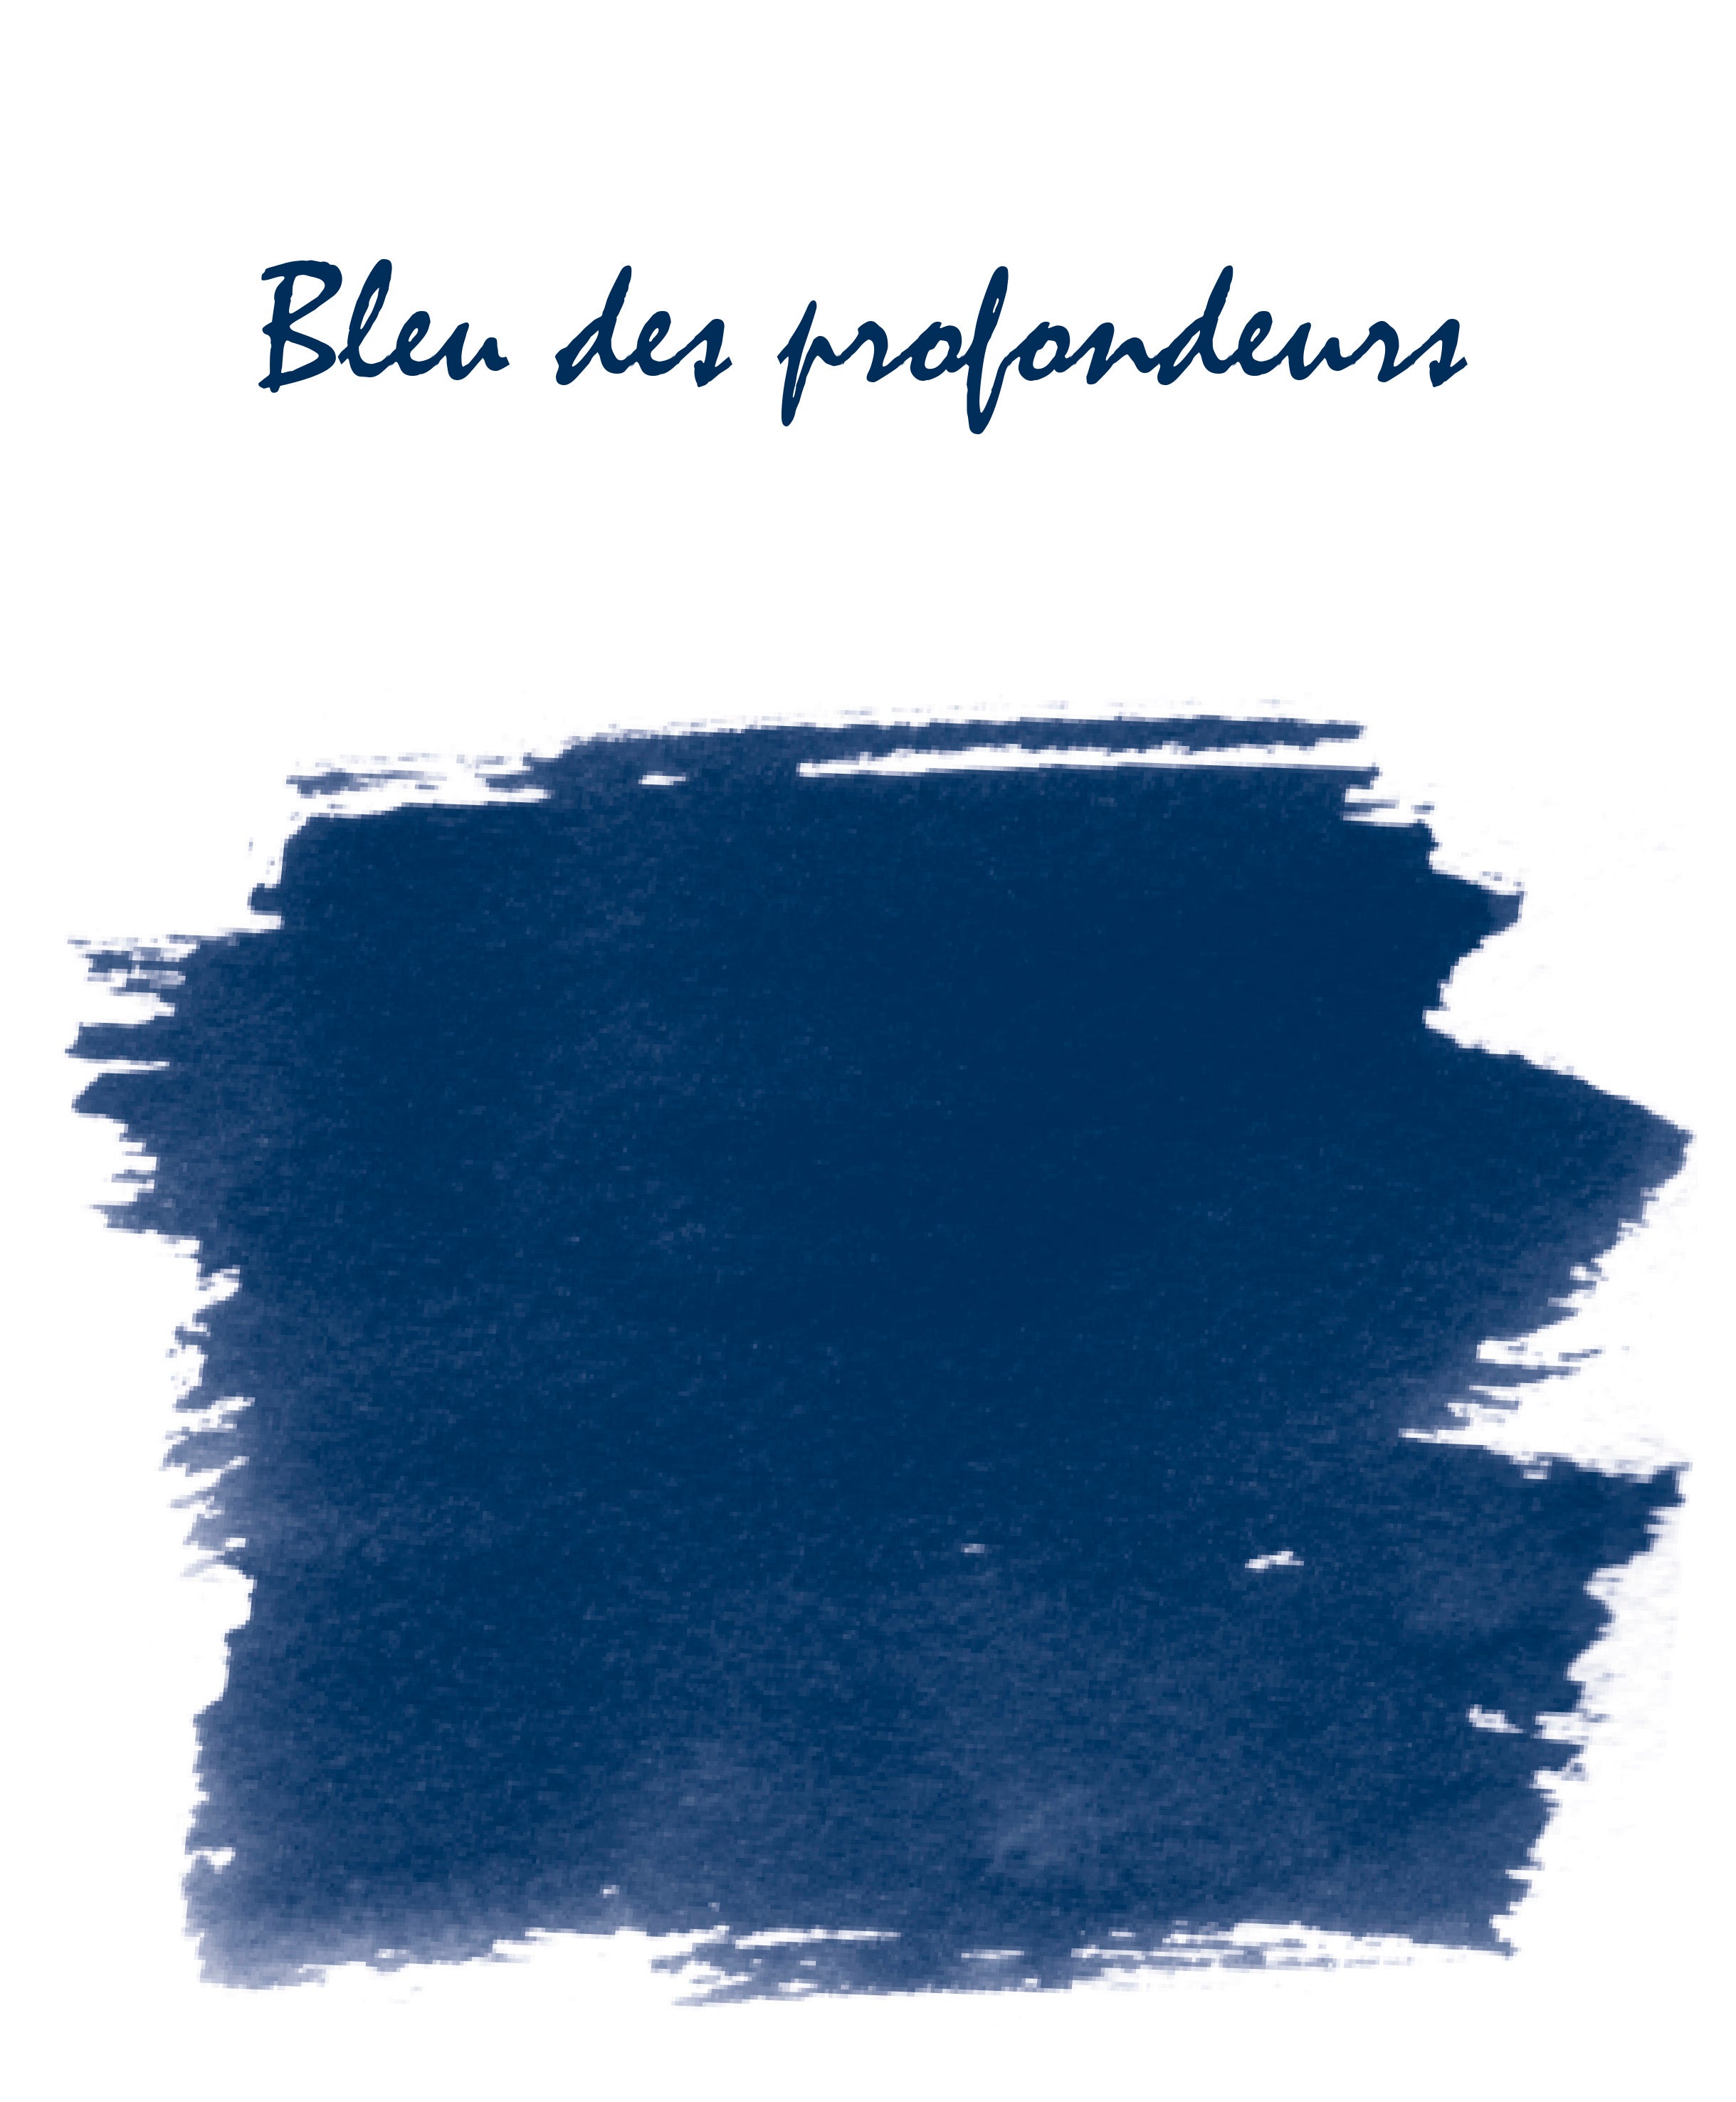 Ink Bleu des Profondeurs, 6 cartridges